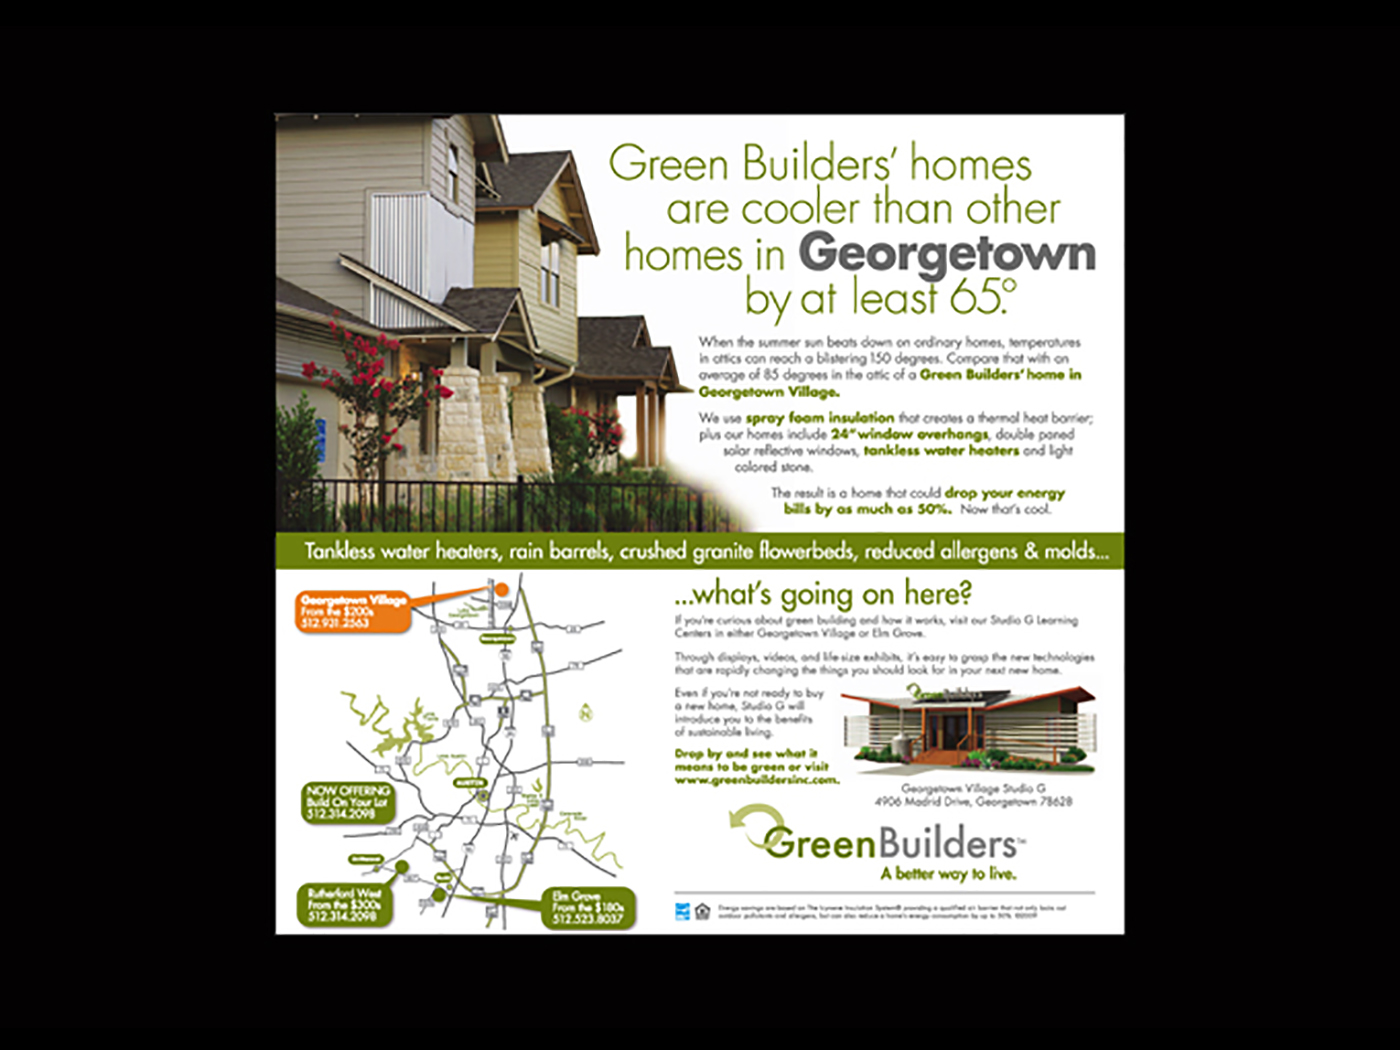 Green Builders Newpaper Cooler Ad Image